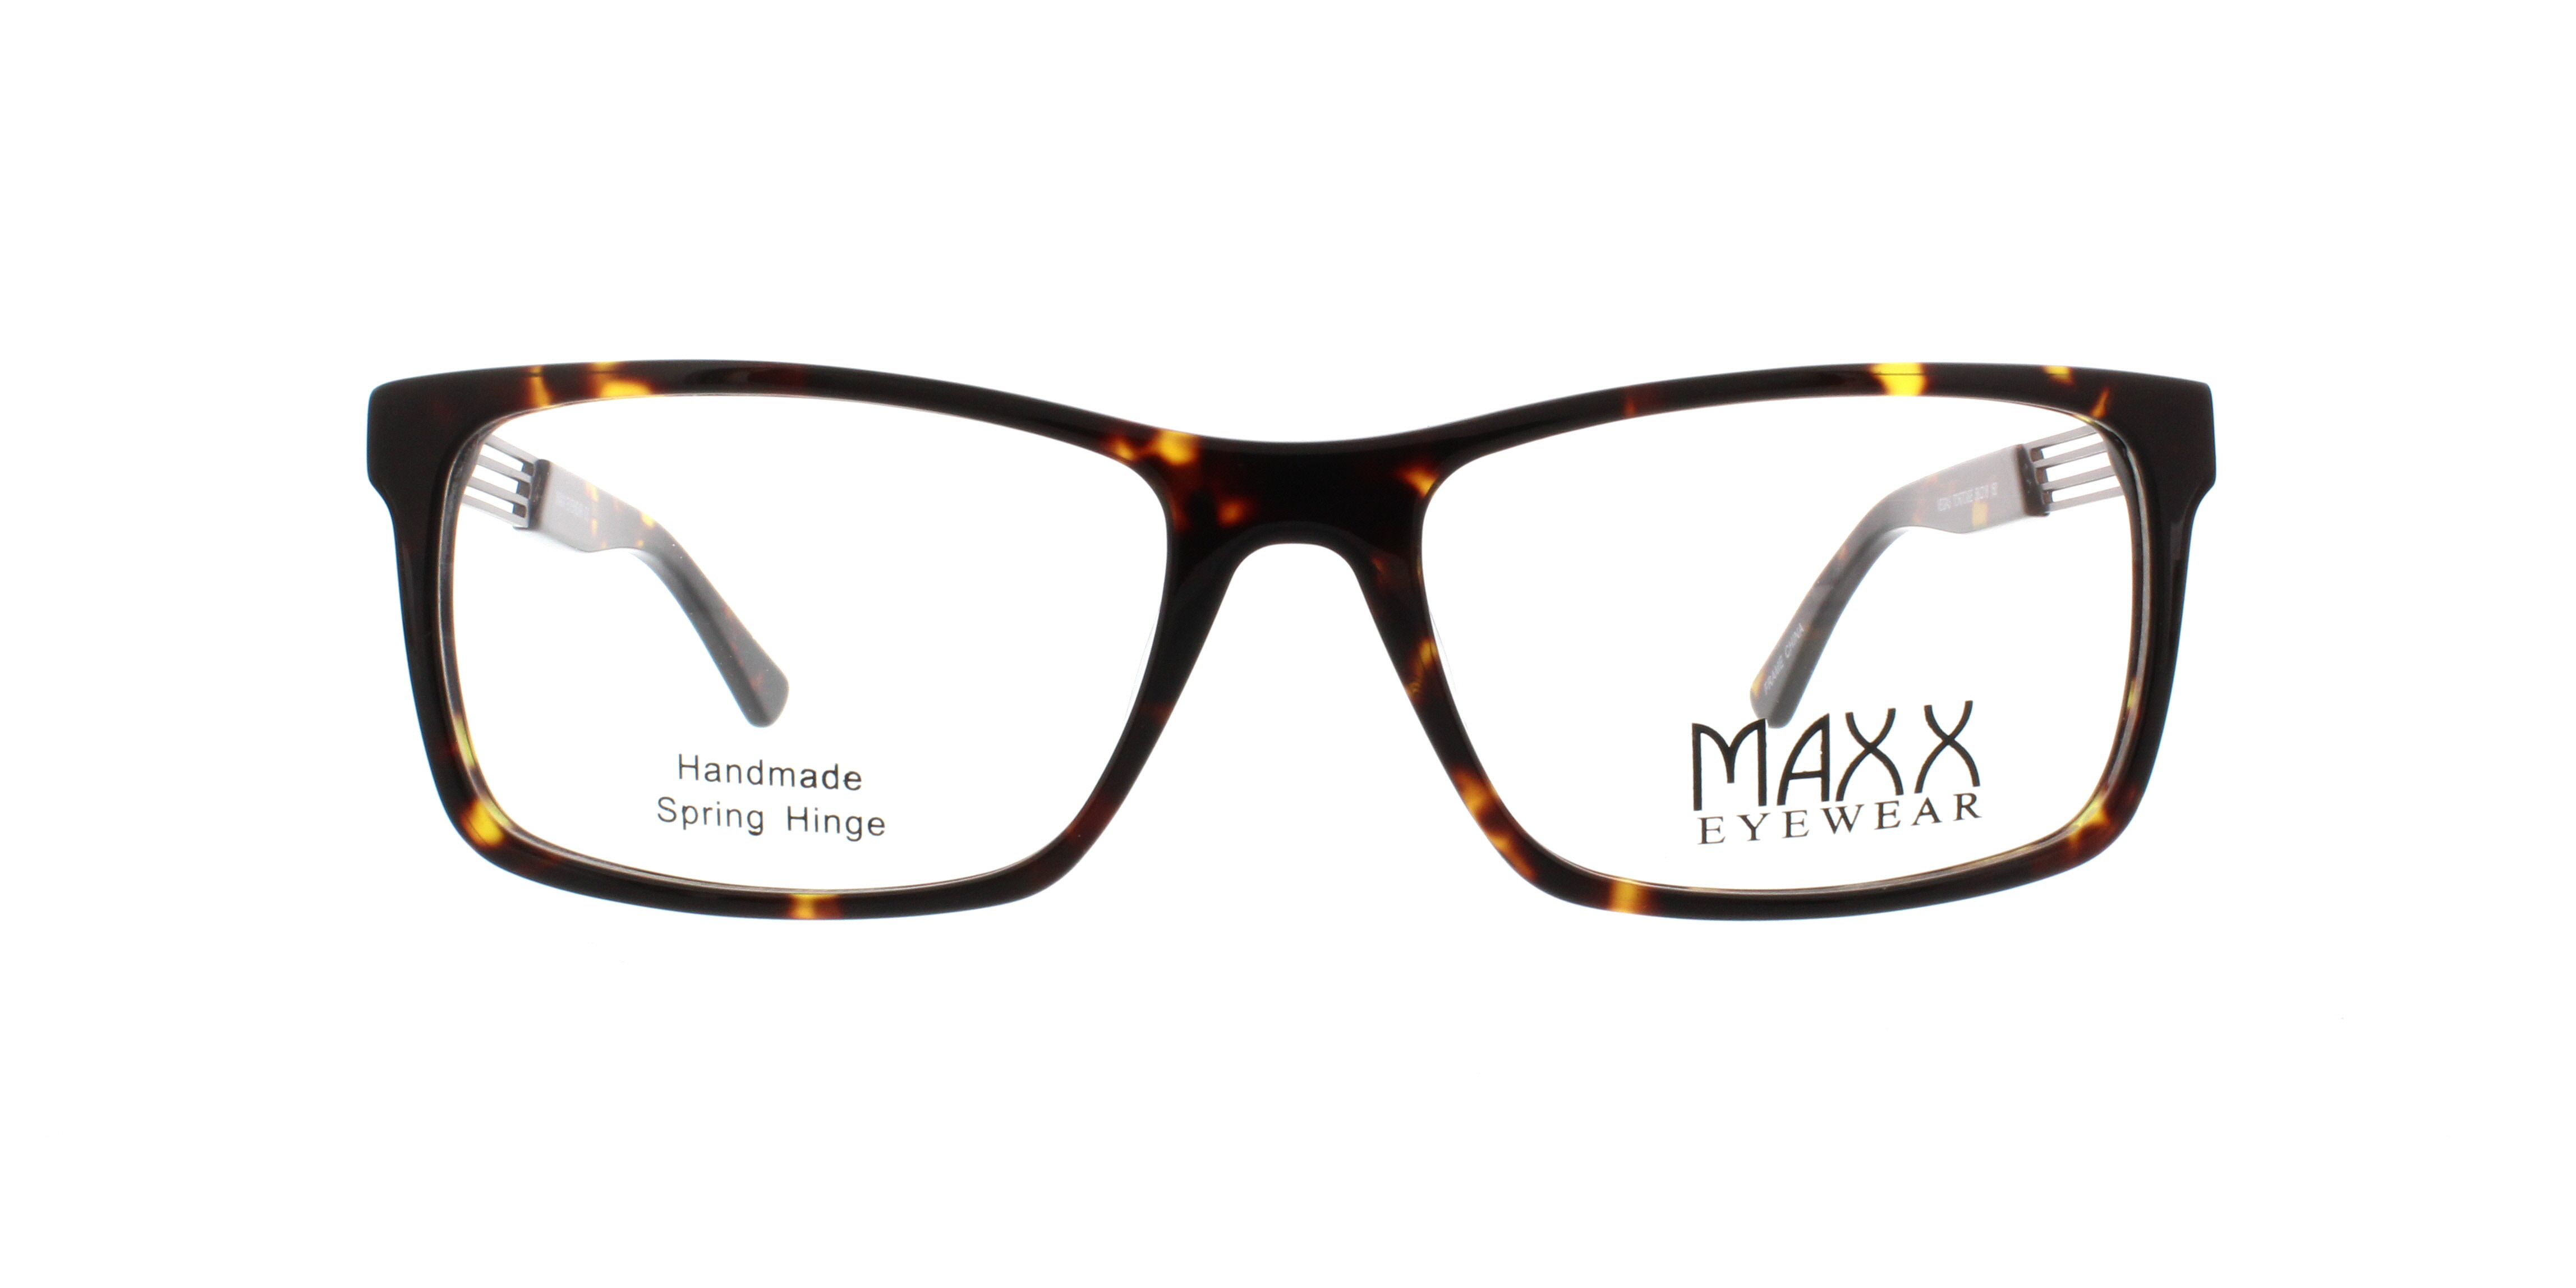 Designer Frames Outlet. Maxx Eyewear Eyeglasses Vegas